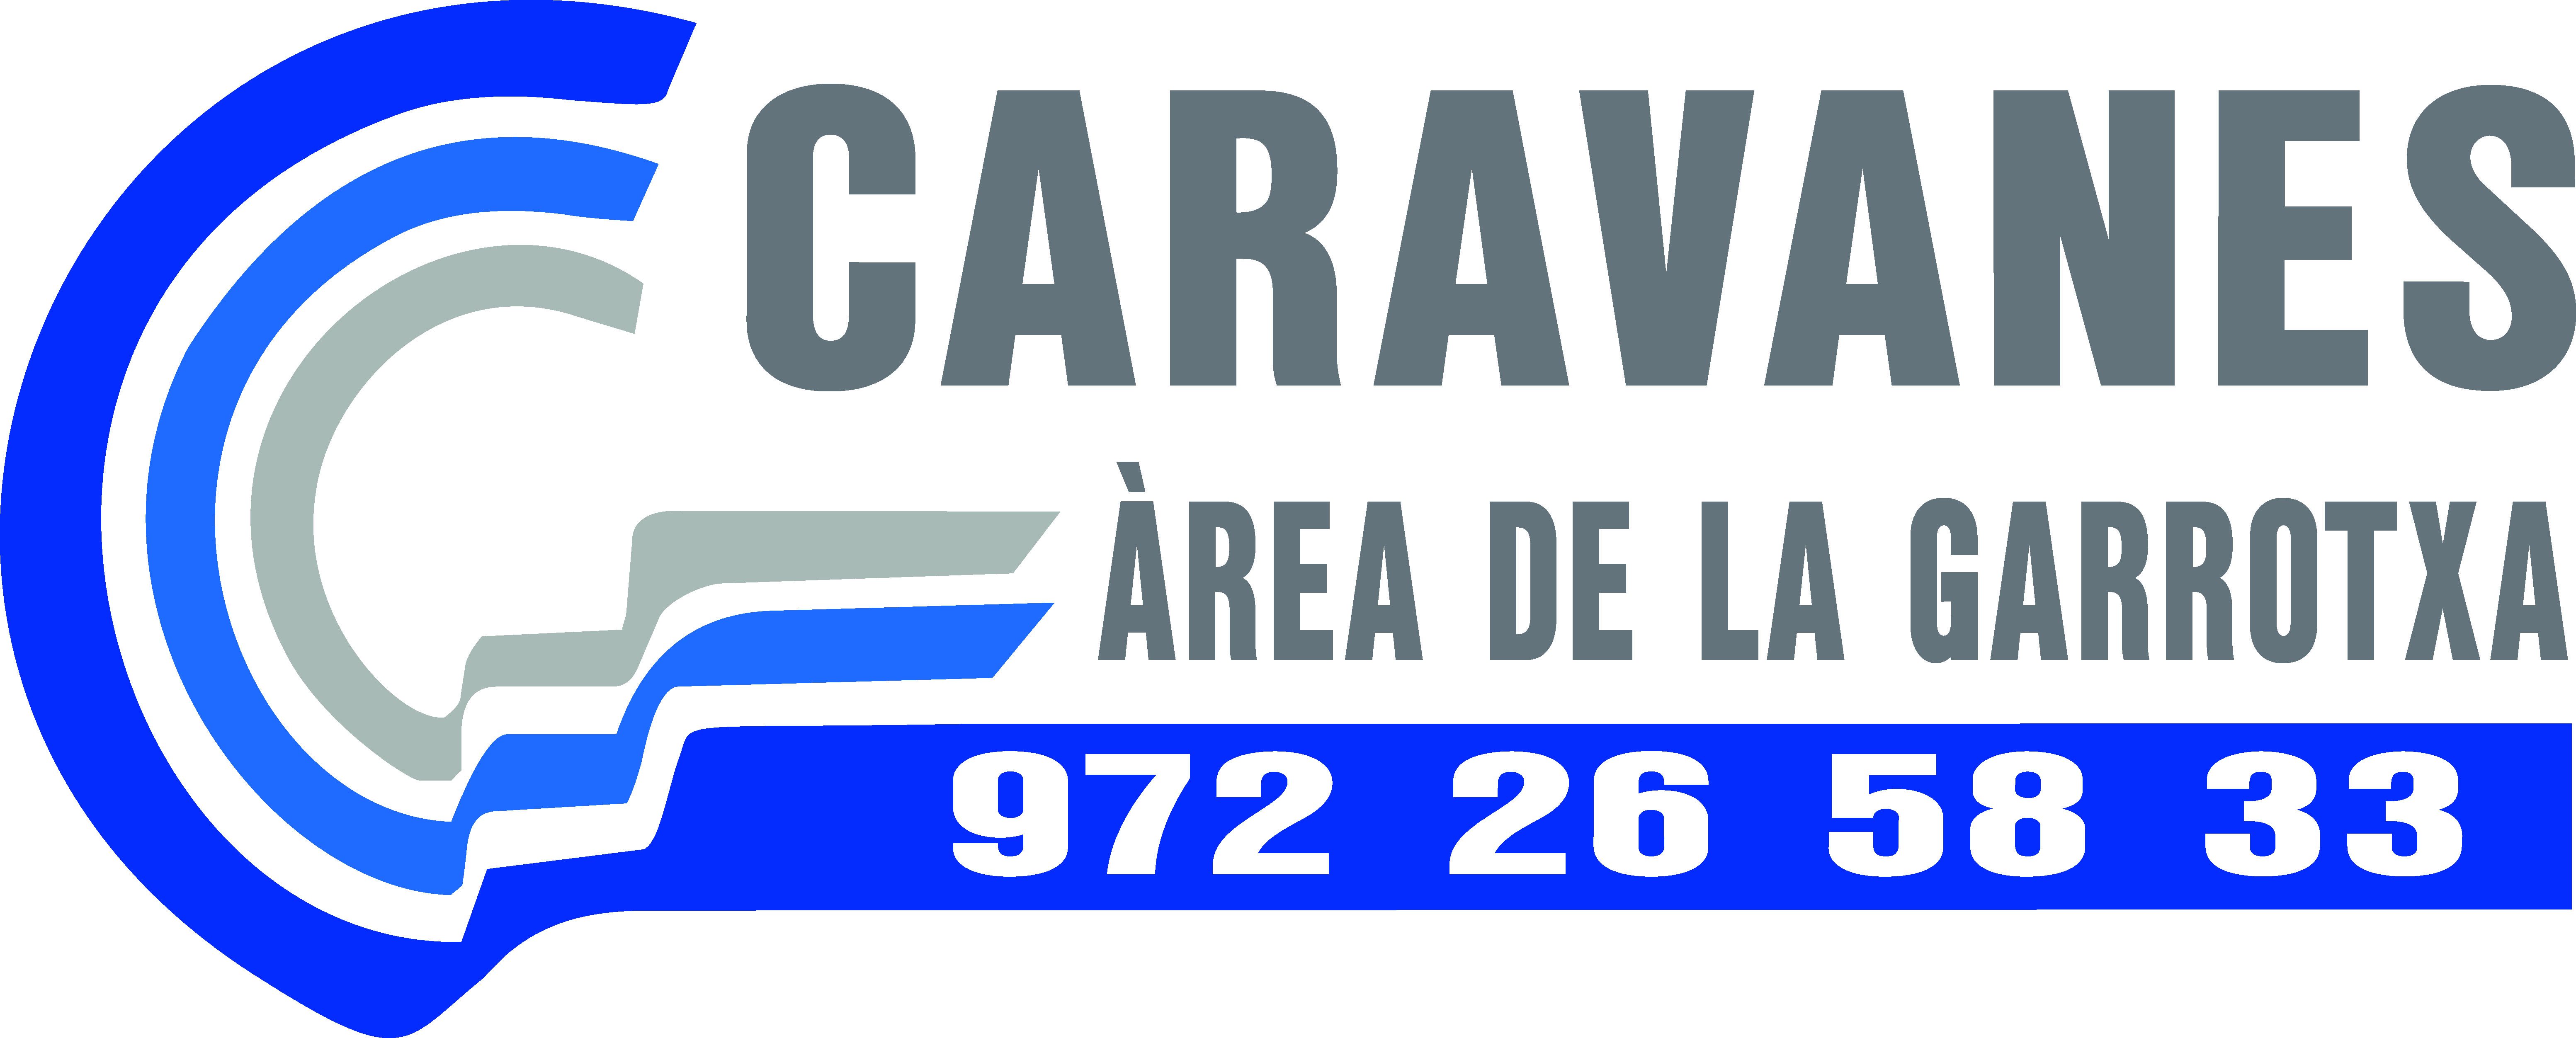 Caravanes Garrotxa